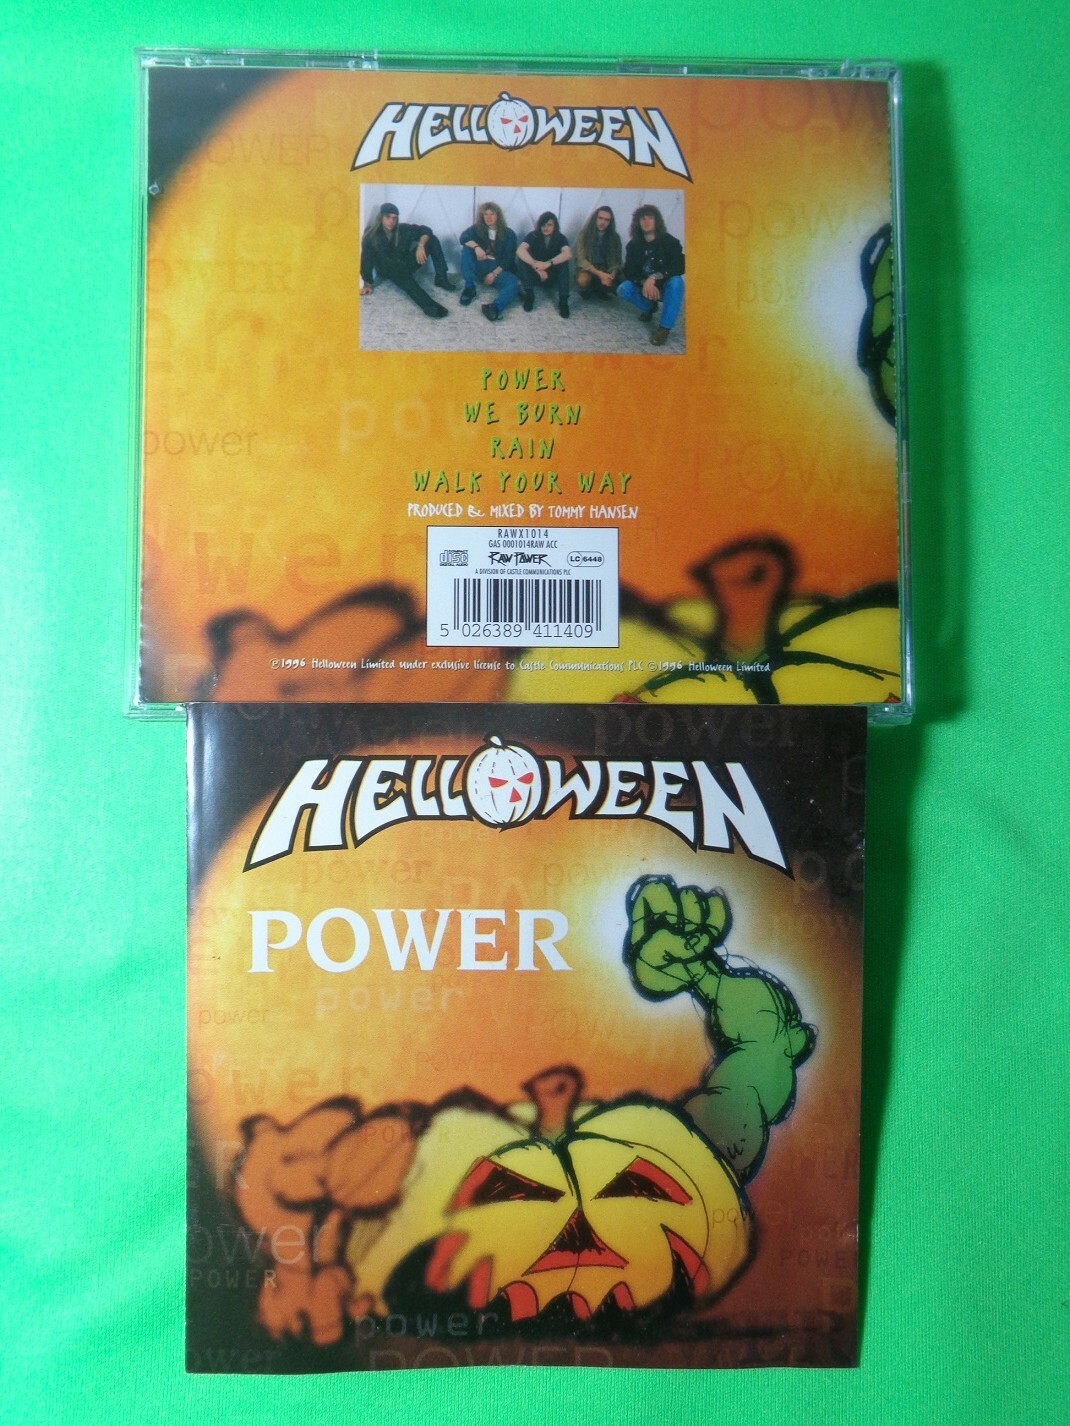 CD - Helloween - Power (Single/Germany)